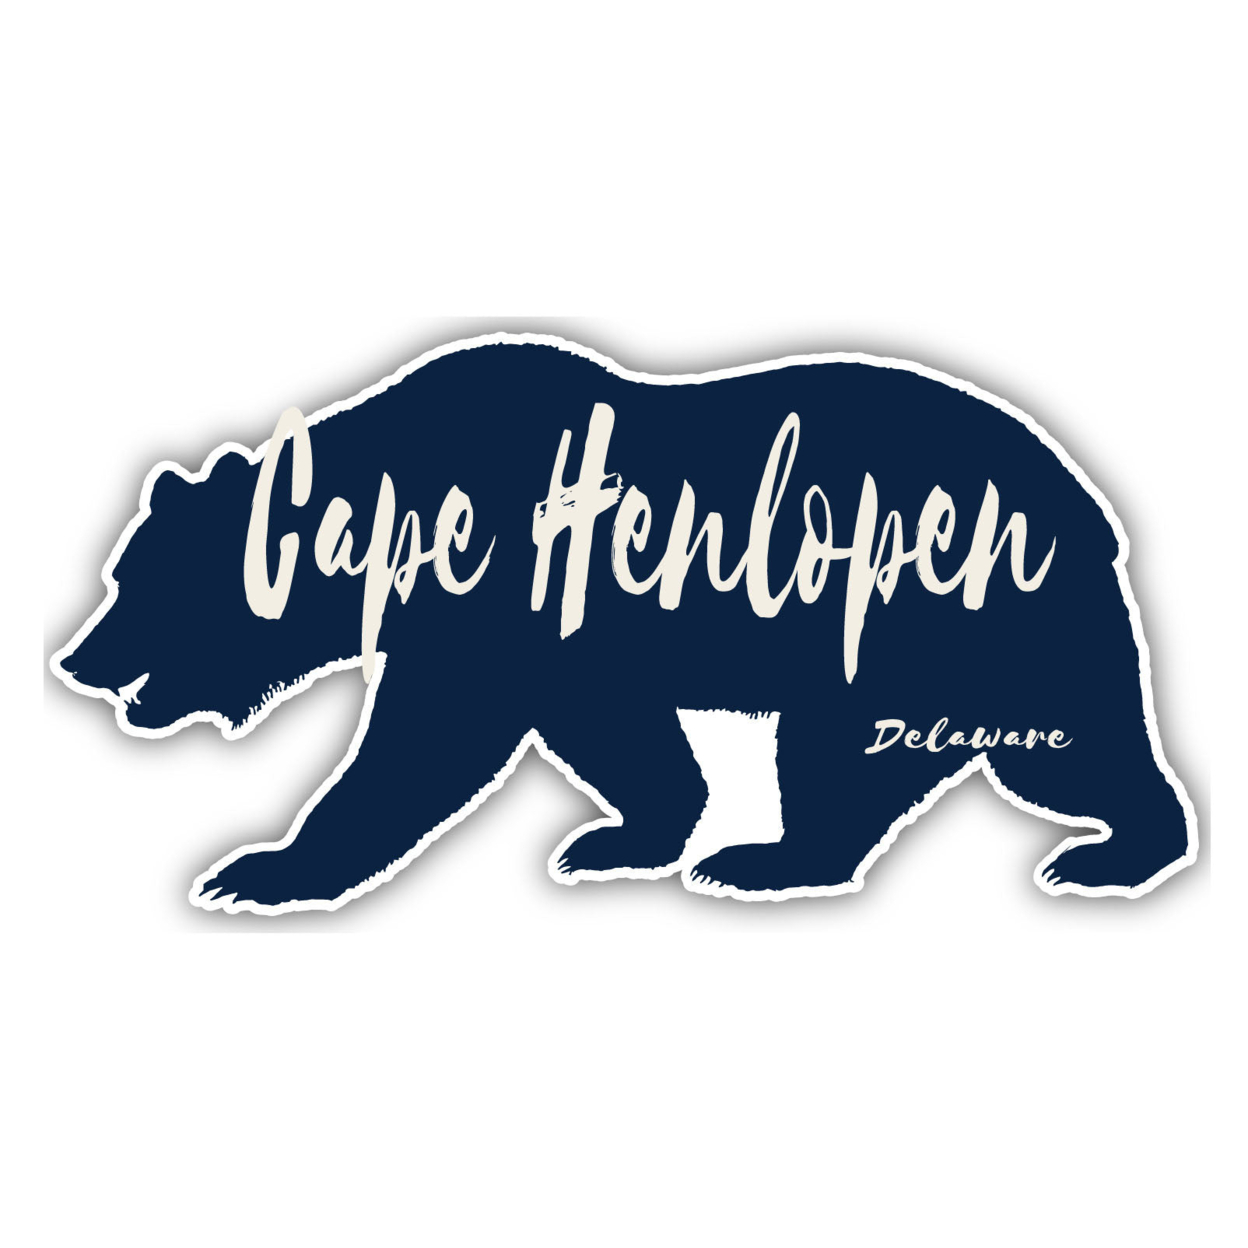 Cape Henlopen Delaware Souvenir Decorative Stickers (Choose Theme And Size) - Single Unit, 6-Inch, Camp Life